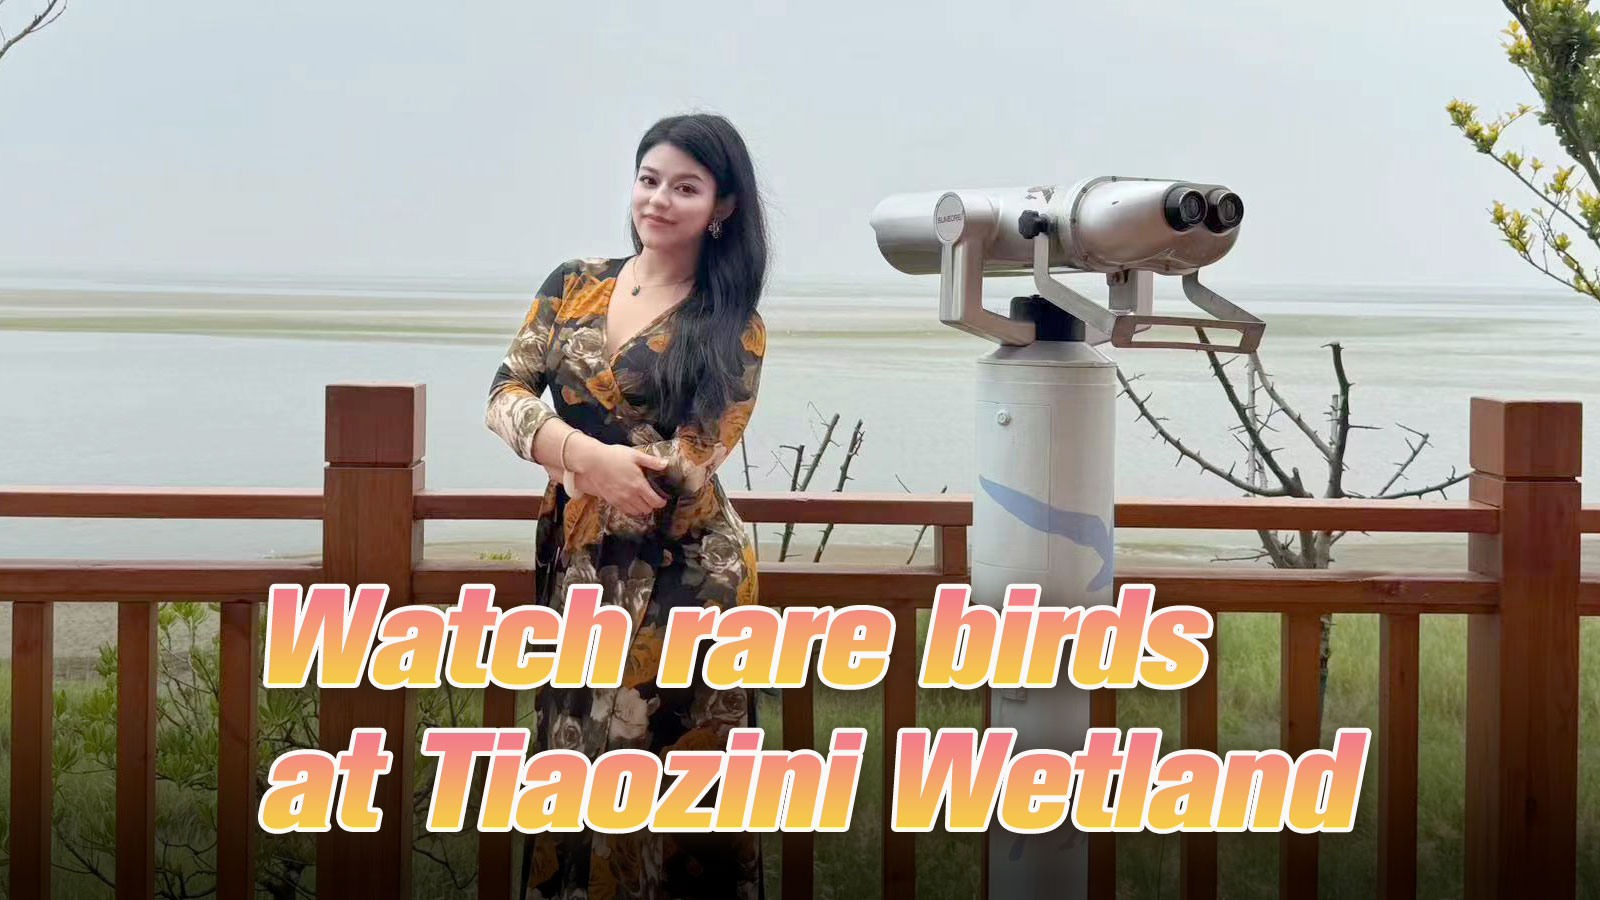 Live: Watch rare birds at Tiaozini Wetland in Jiangsu Province